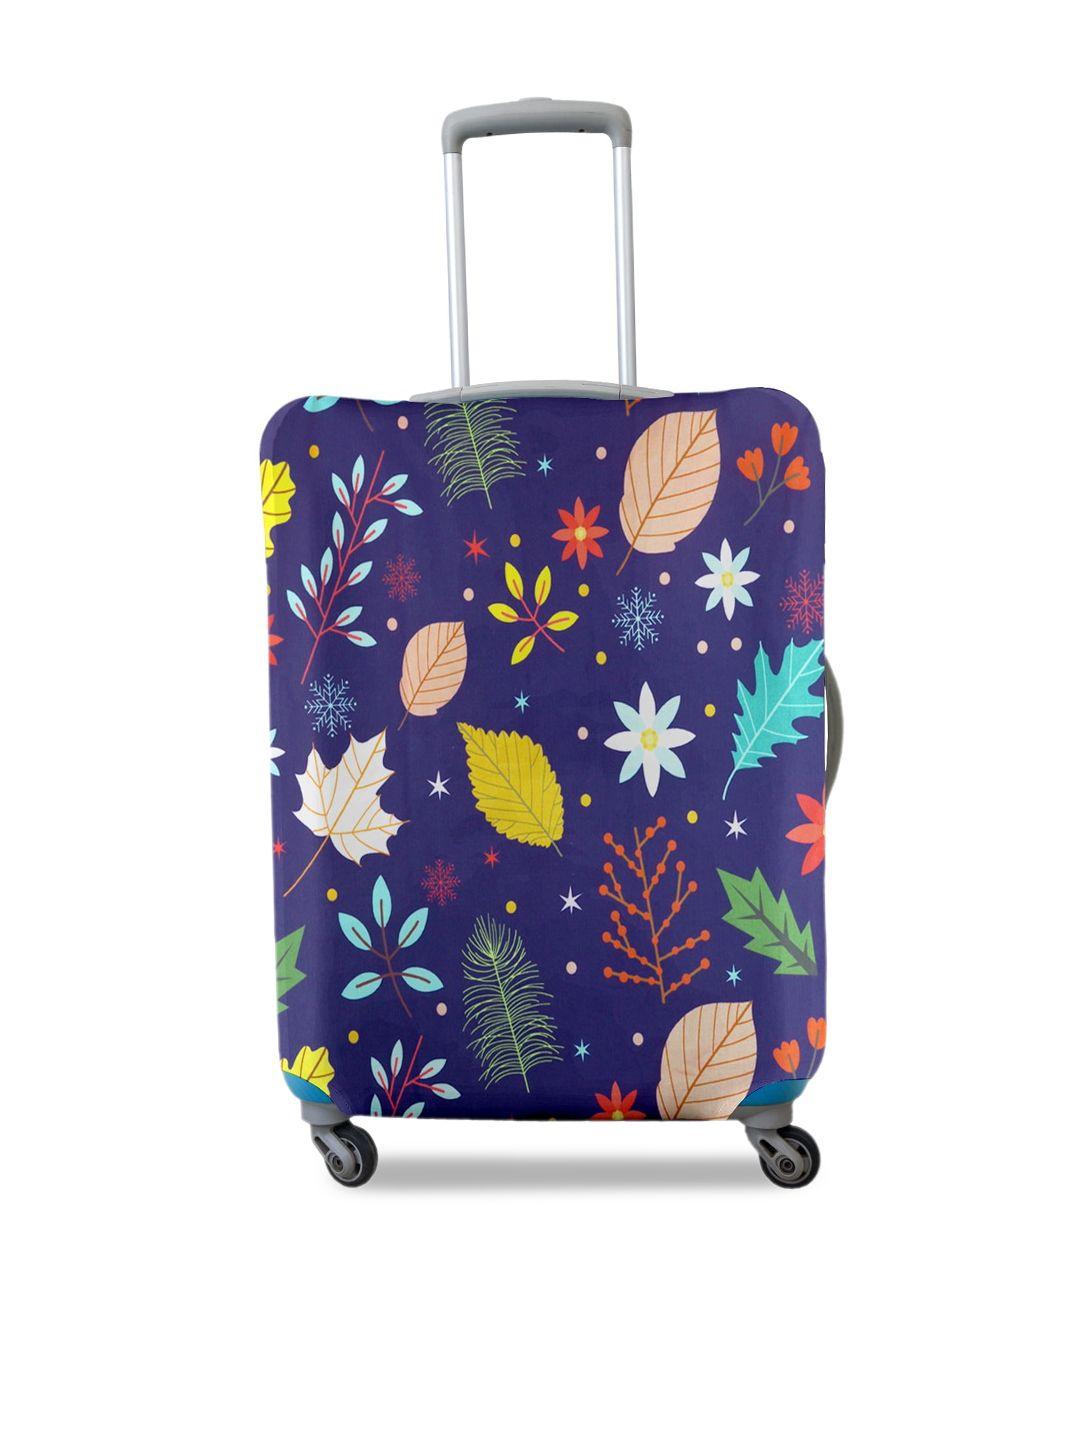 cortina purple & white printed protective luggage cover